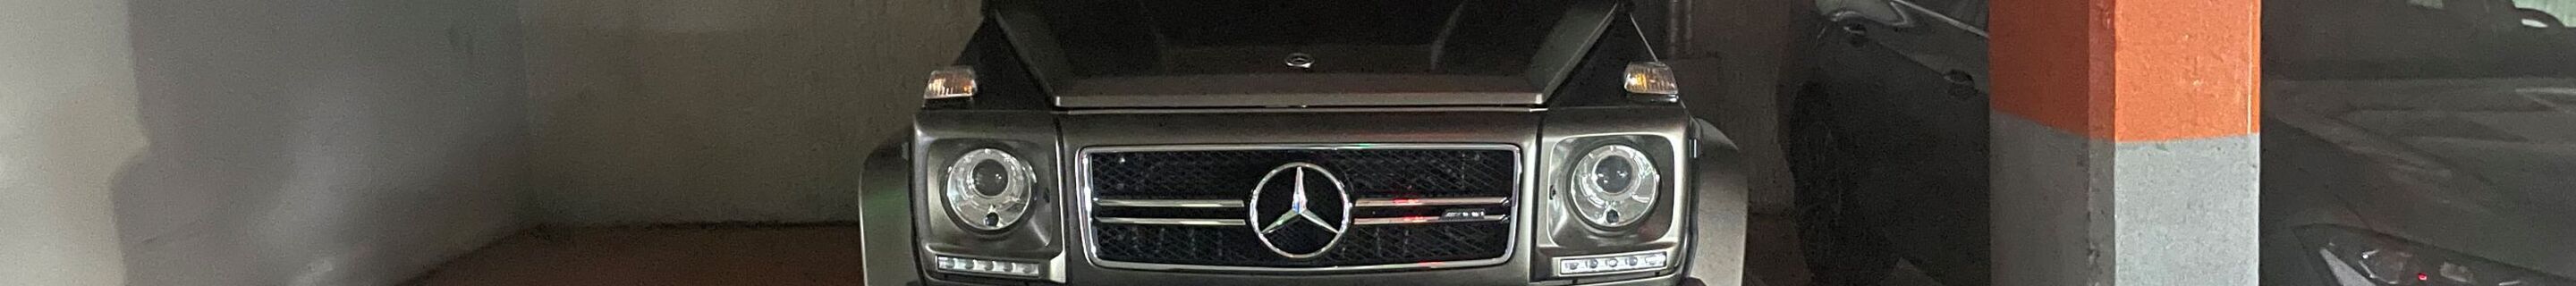 Mercedes-AMG G 63 2016